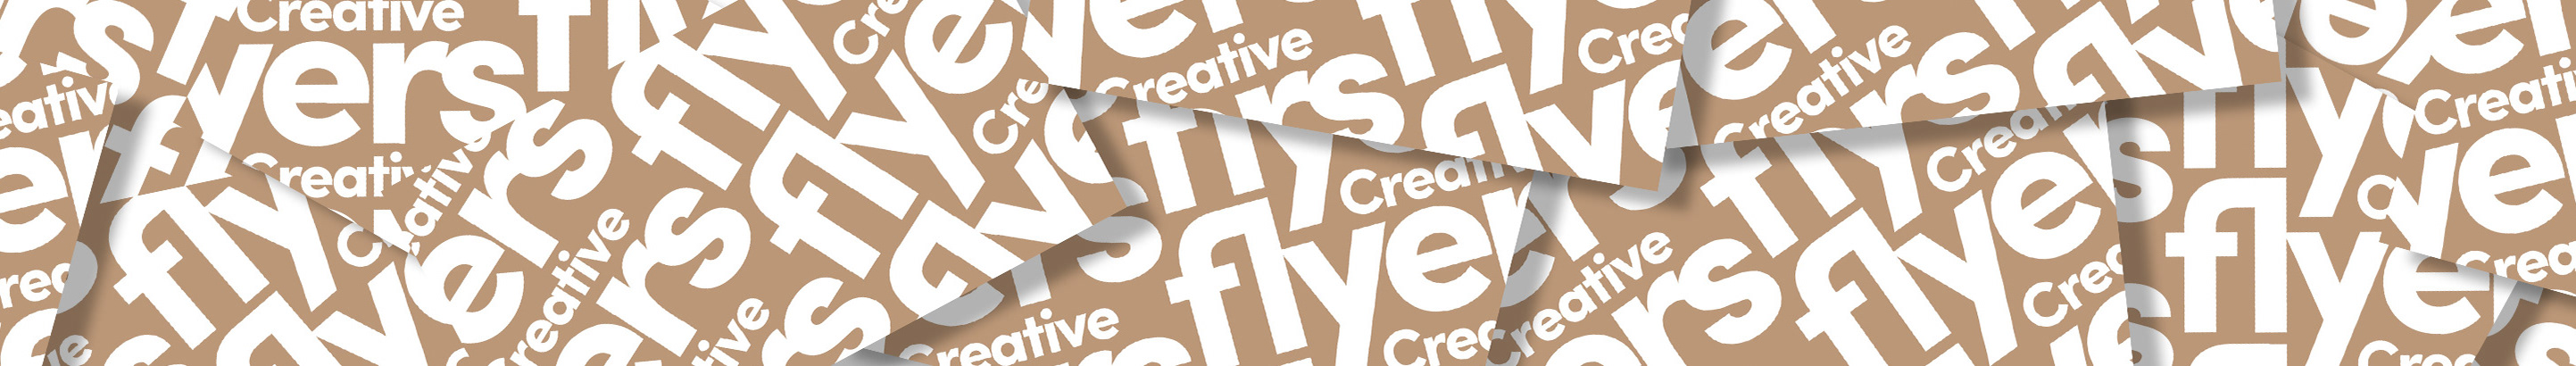 Banner de perfil de Creative Flyers